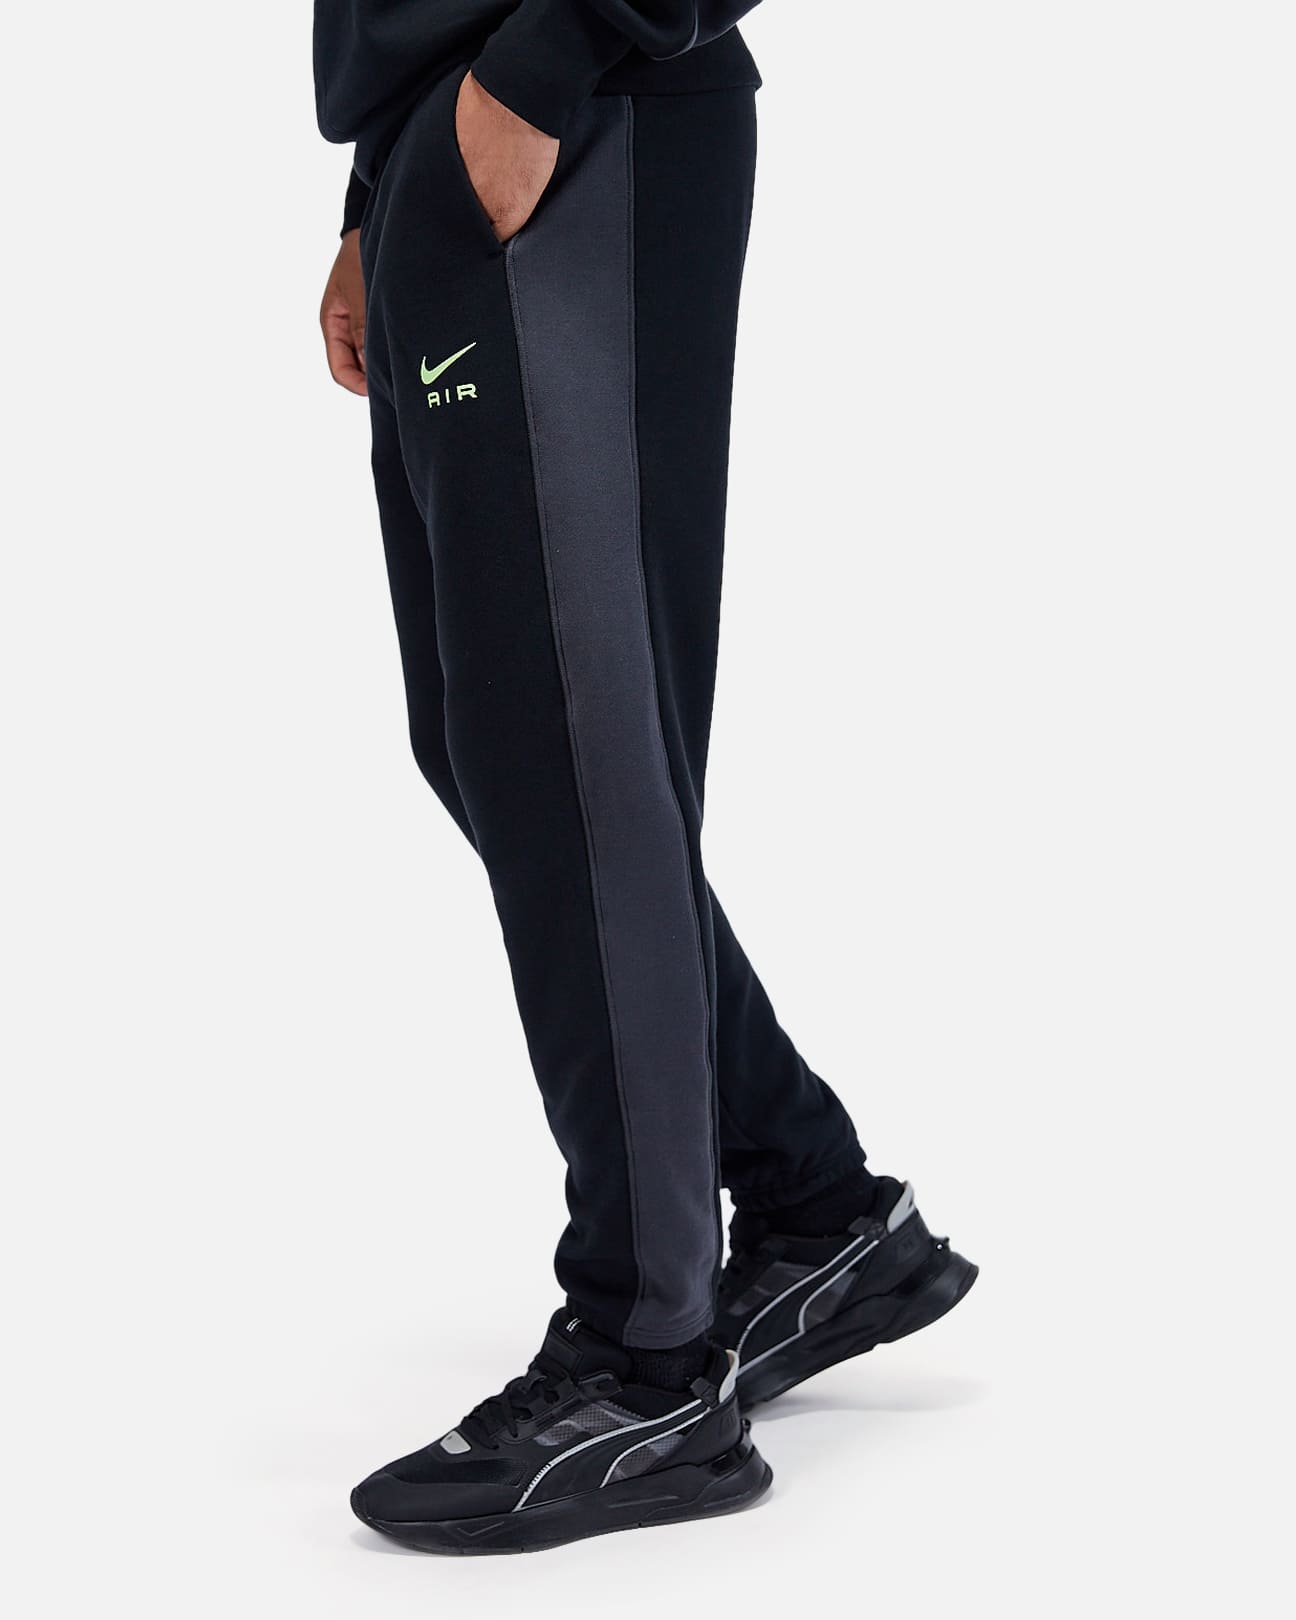 Pantalon Nike Sportswear Air - Noir/Gris/Vert